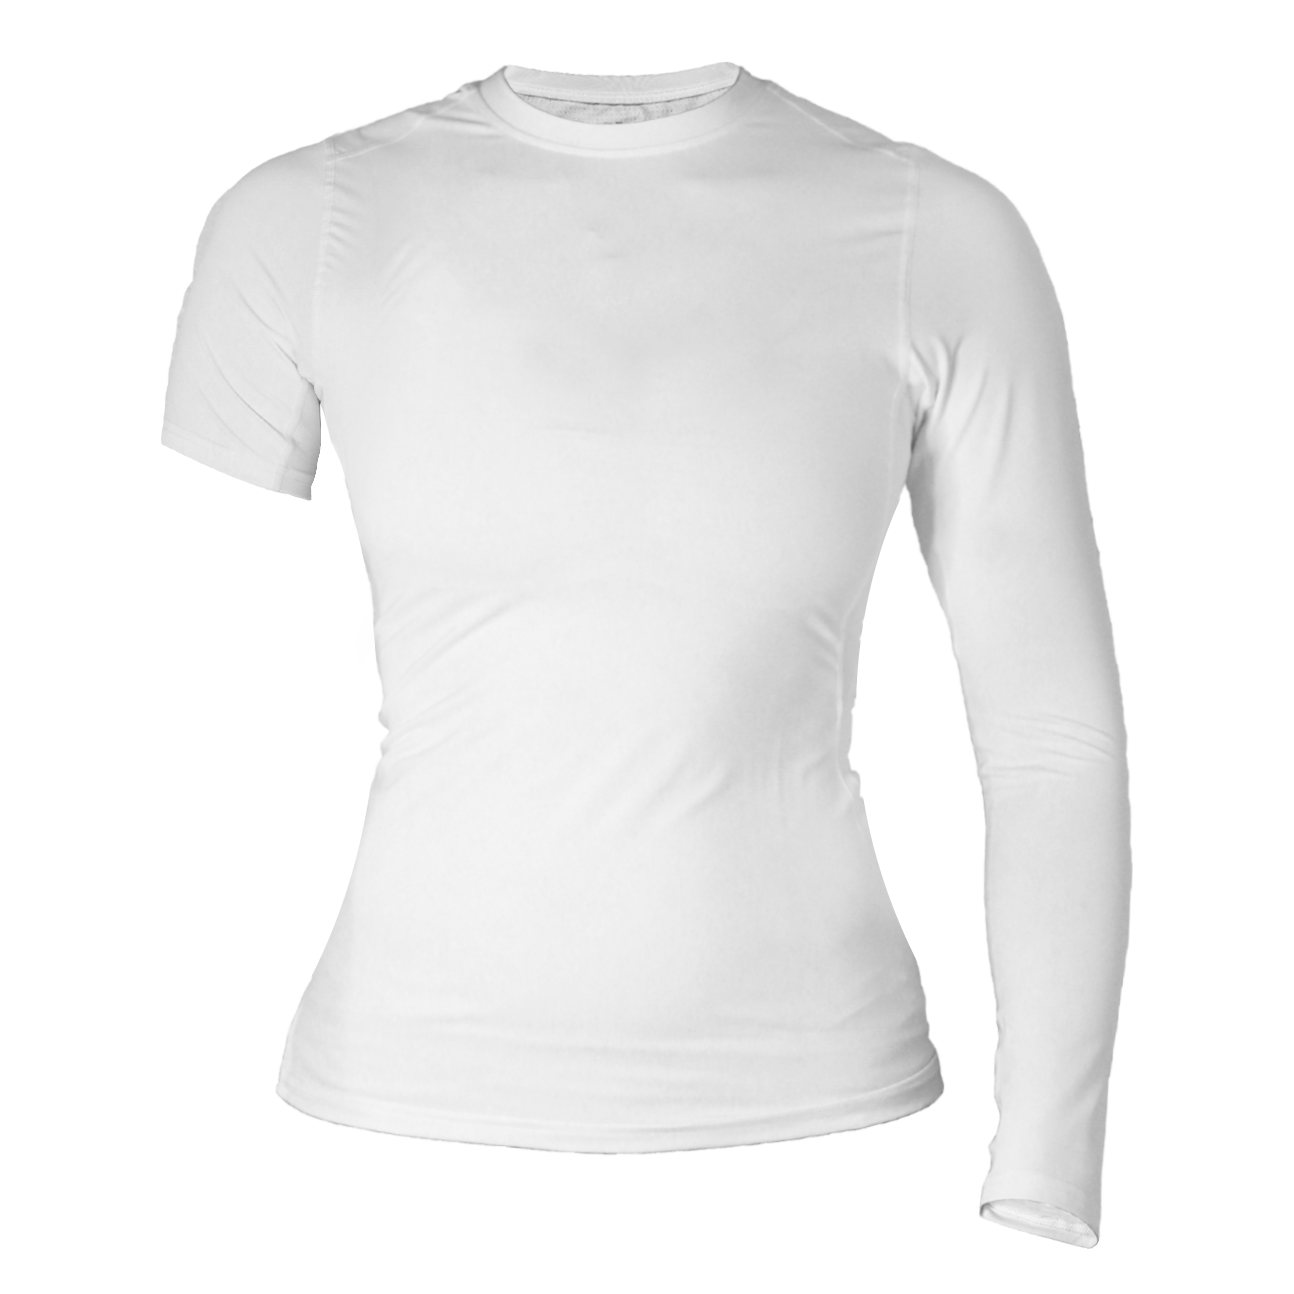 Womens Compression Shirts: Long & Short Sleeve